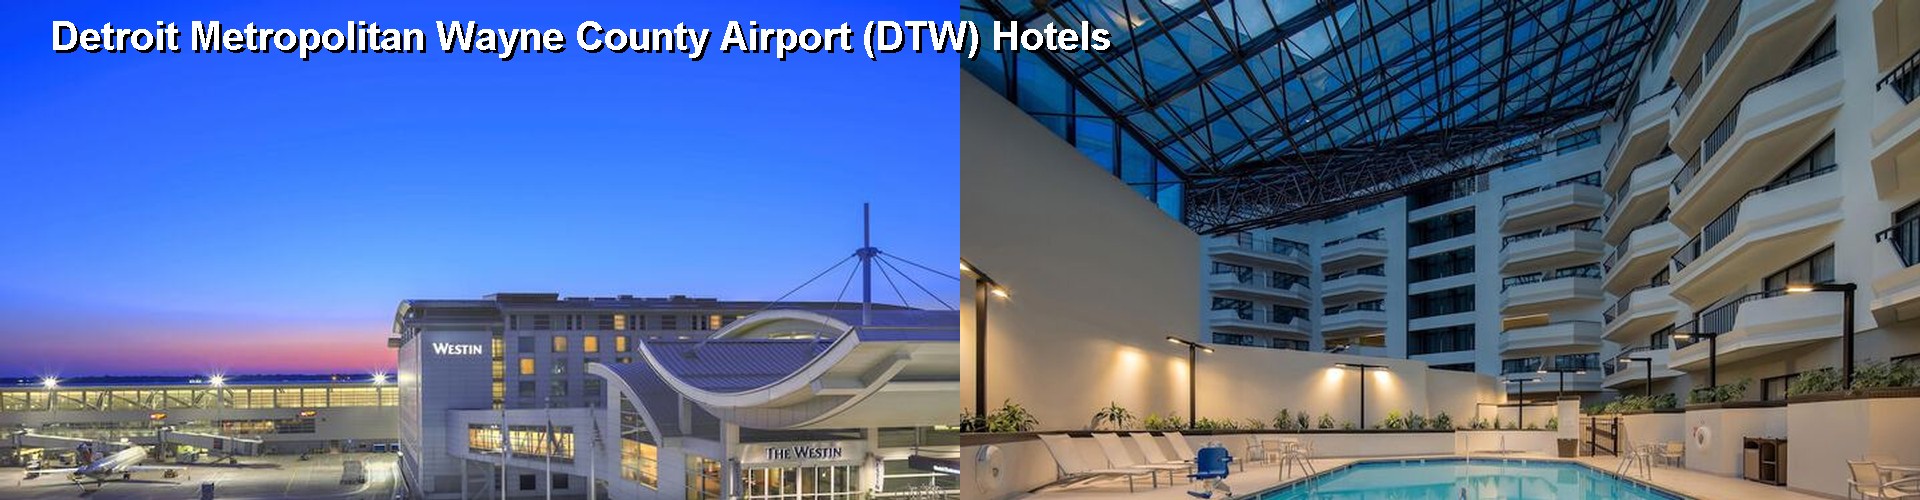 5 Best Hotels near Detroit Metropolitan Wayne County Airport (DTW)